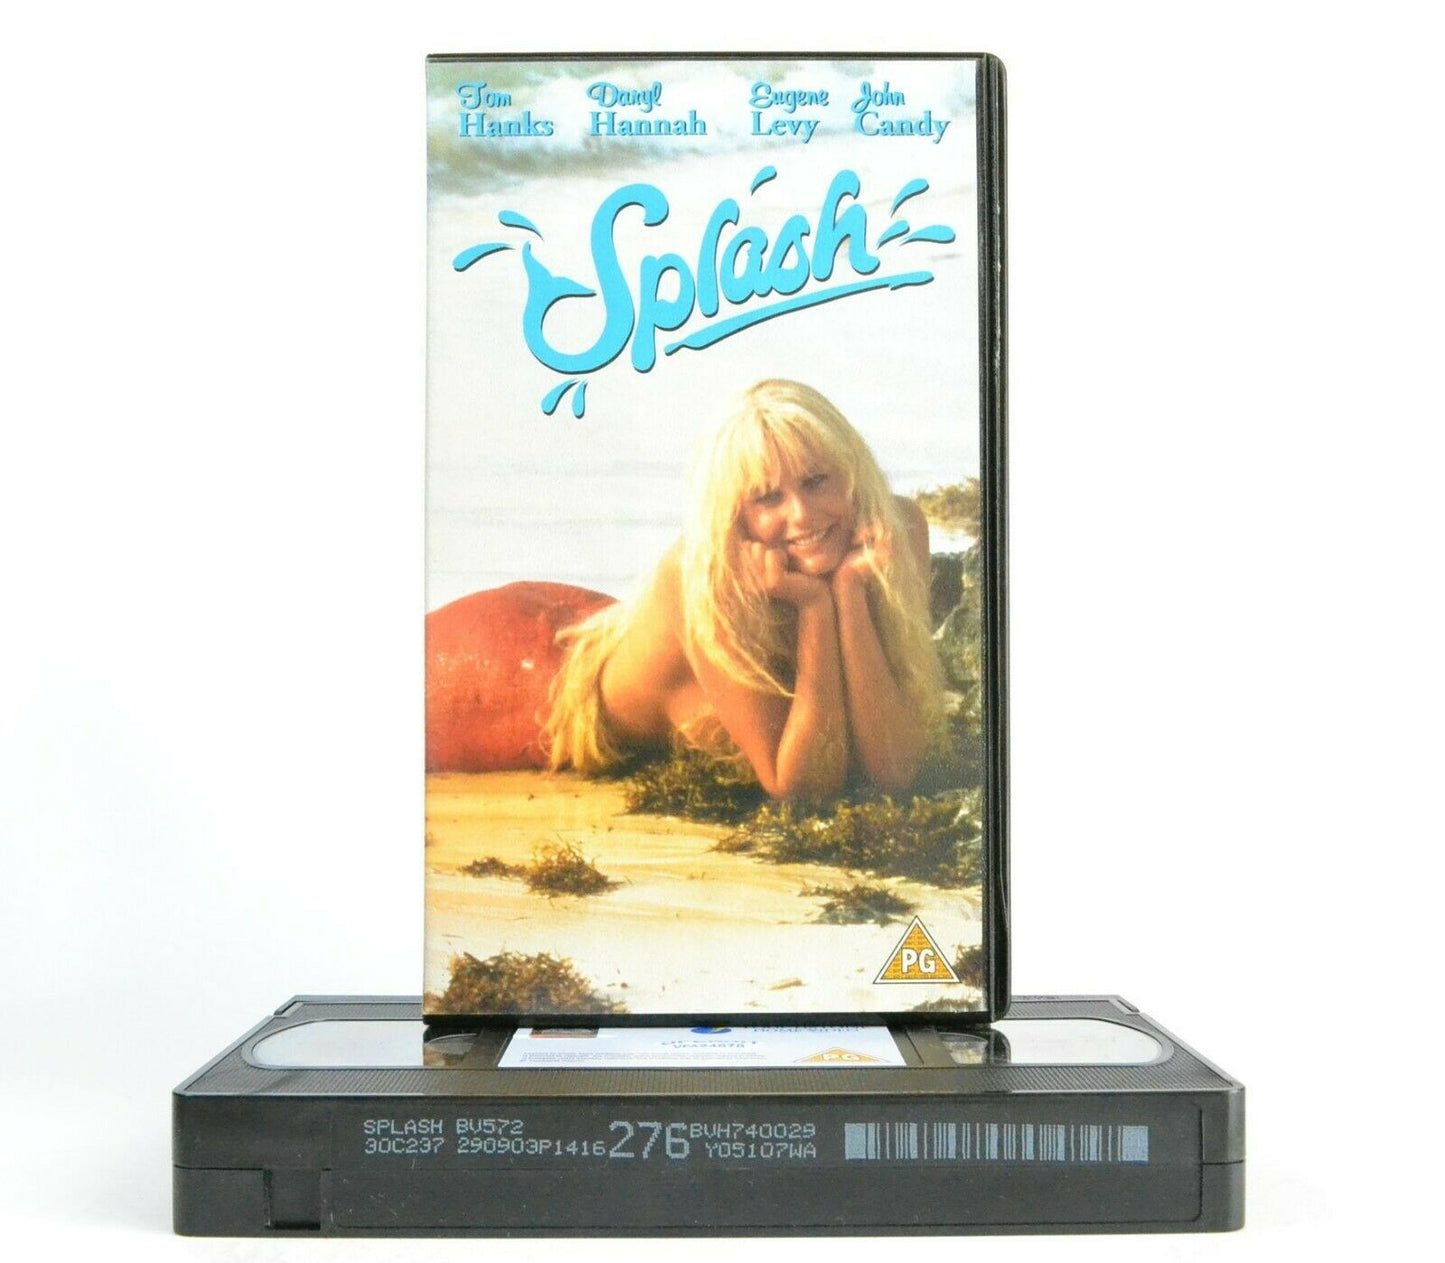 Splash: Film By R.Howard - Romantic Comedy (1984) - T.Hanks/D.Hannah - Pal VHS-